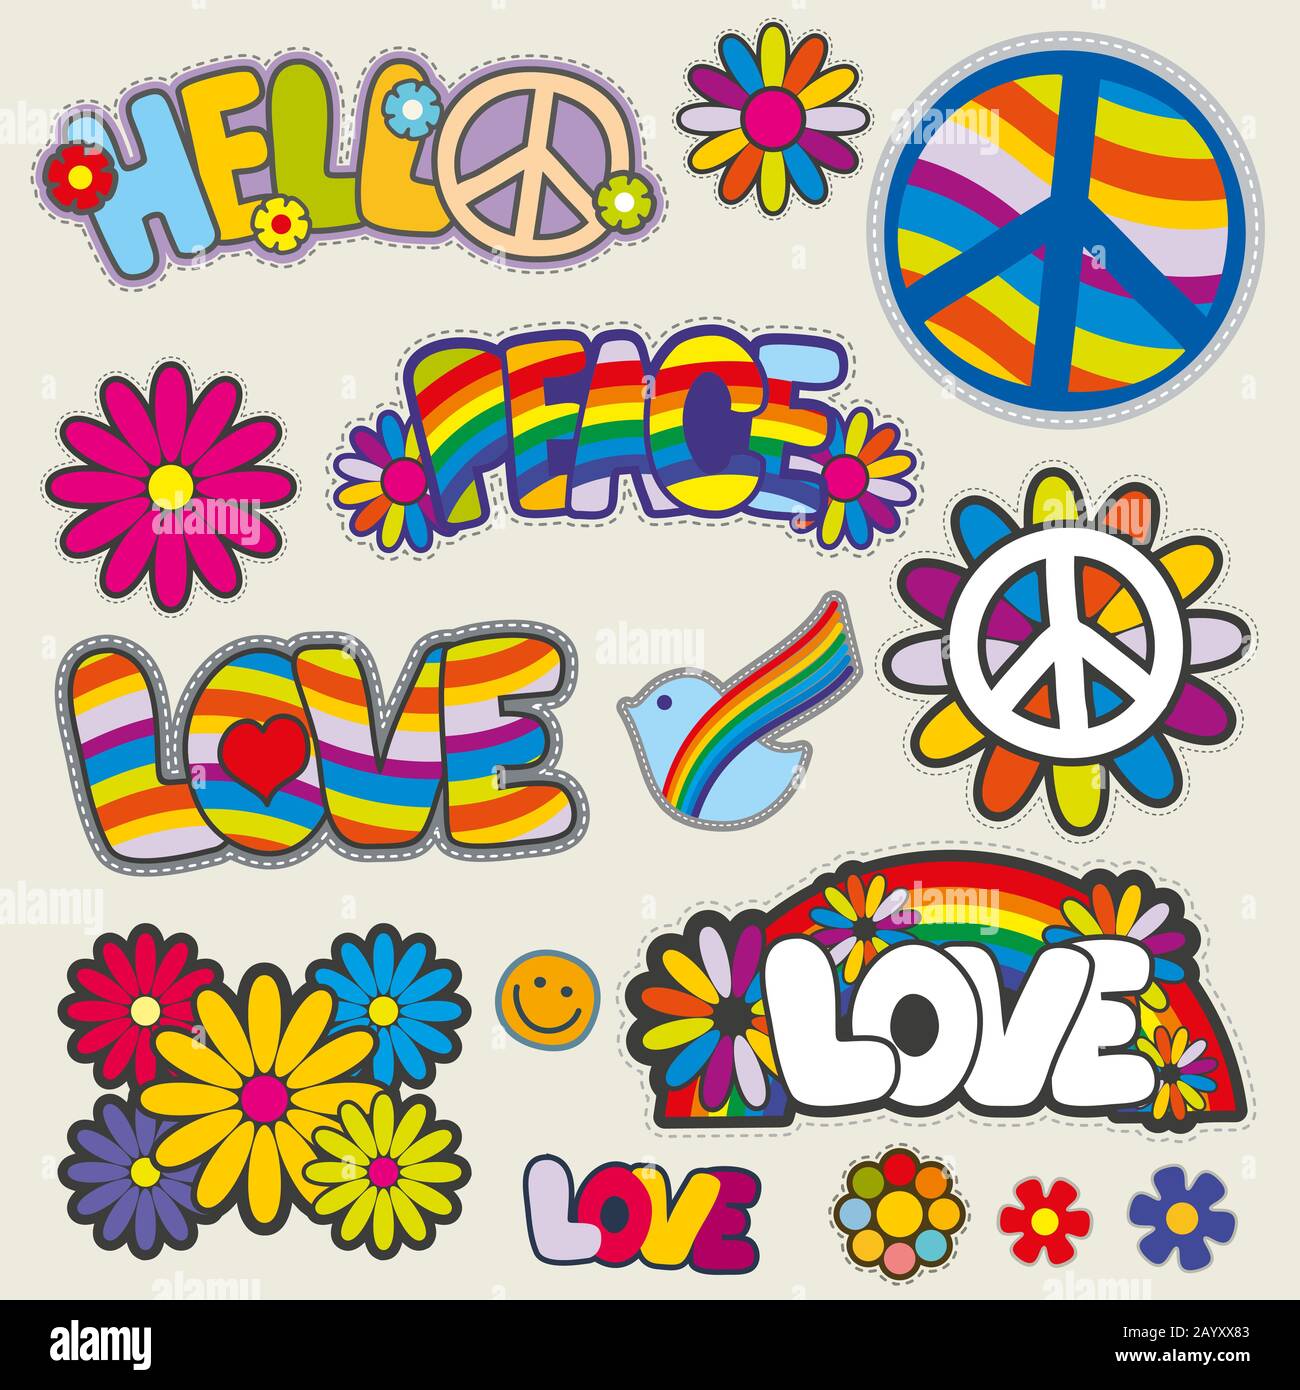 Retrò hippie patch emblemi vettoriali. Patch di amore e pace, insieme di illustrazioni per hippie Illustrazione Vettoriale